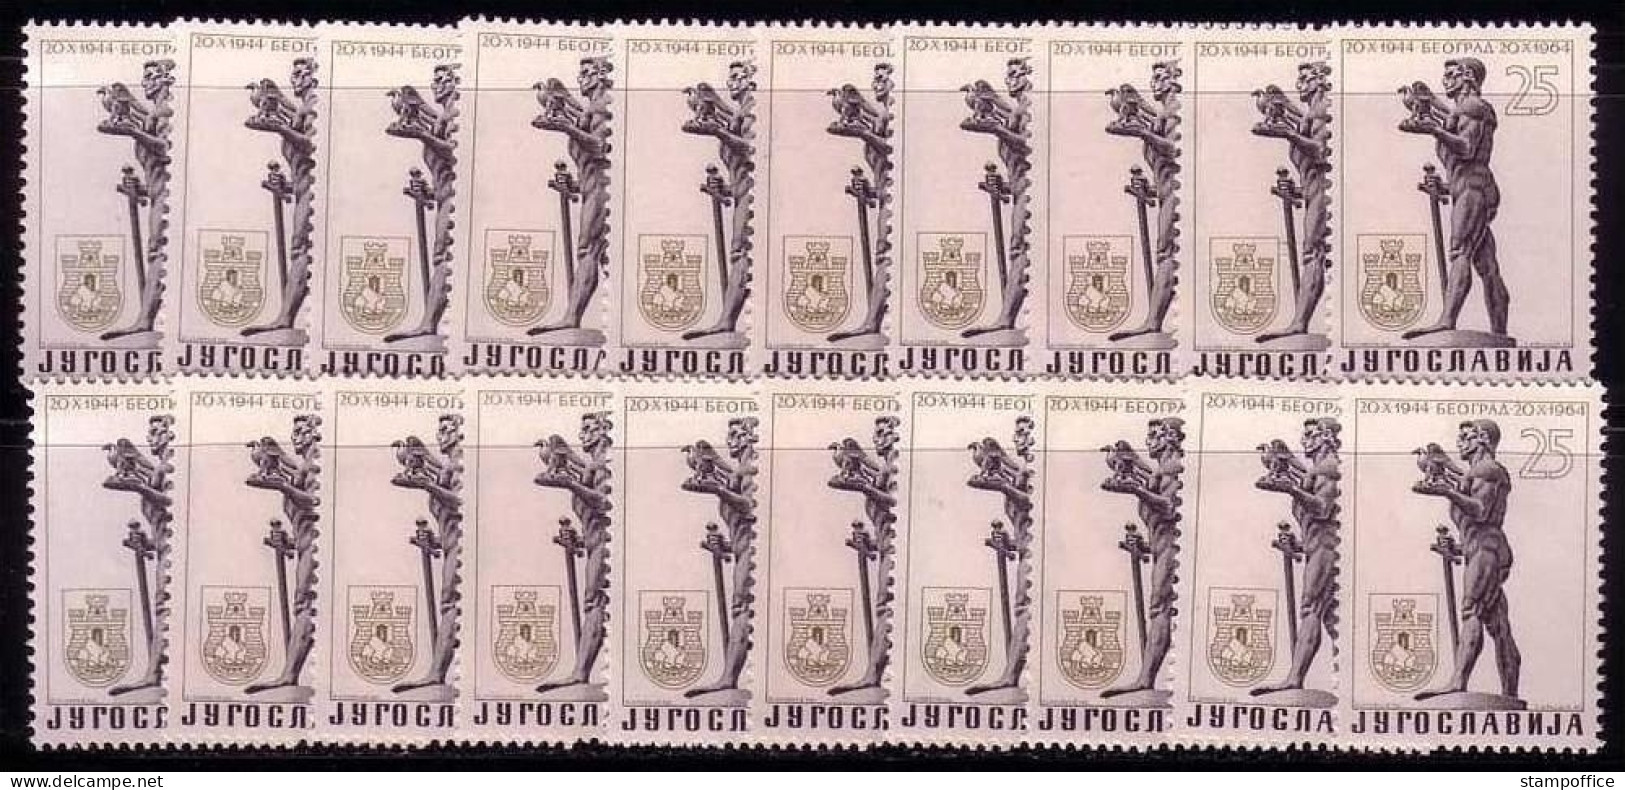 JUGOSLAWIEN 20 X MI-NR. 1094 POSTFRISCH(MINT) BEFREIUNG BELGRADS - STADTWAPPEN - Briefmarken